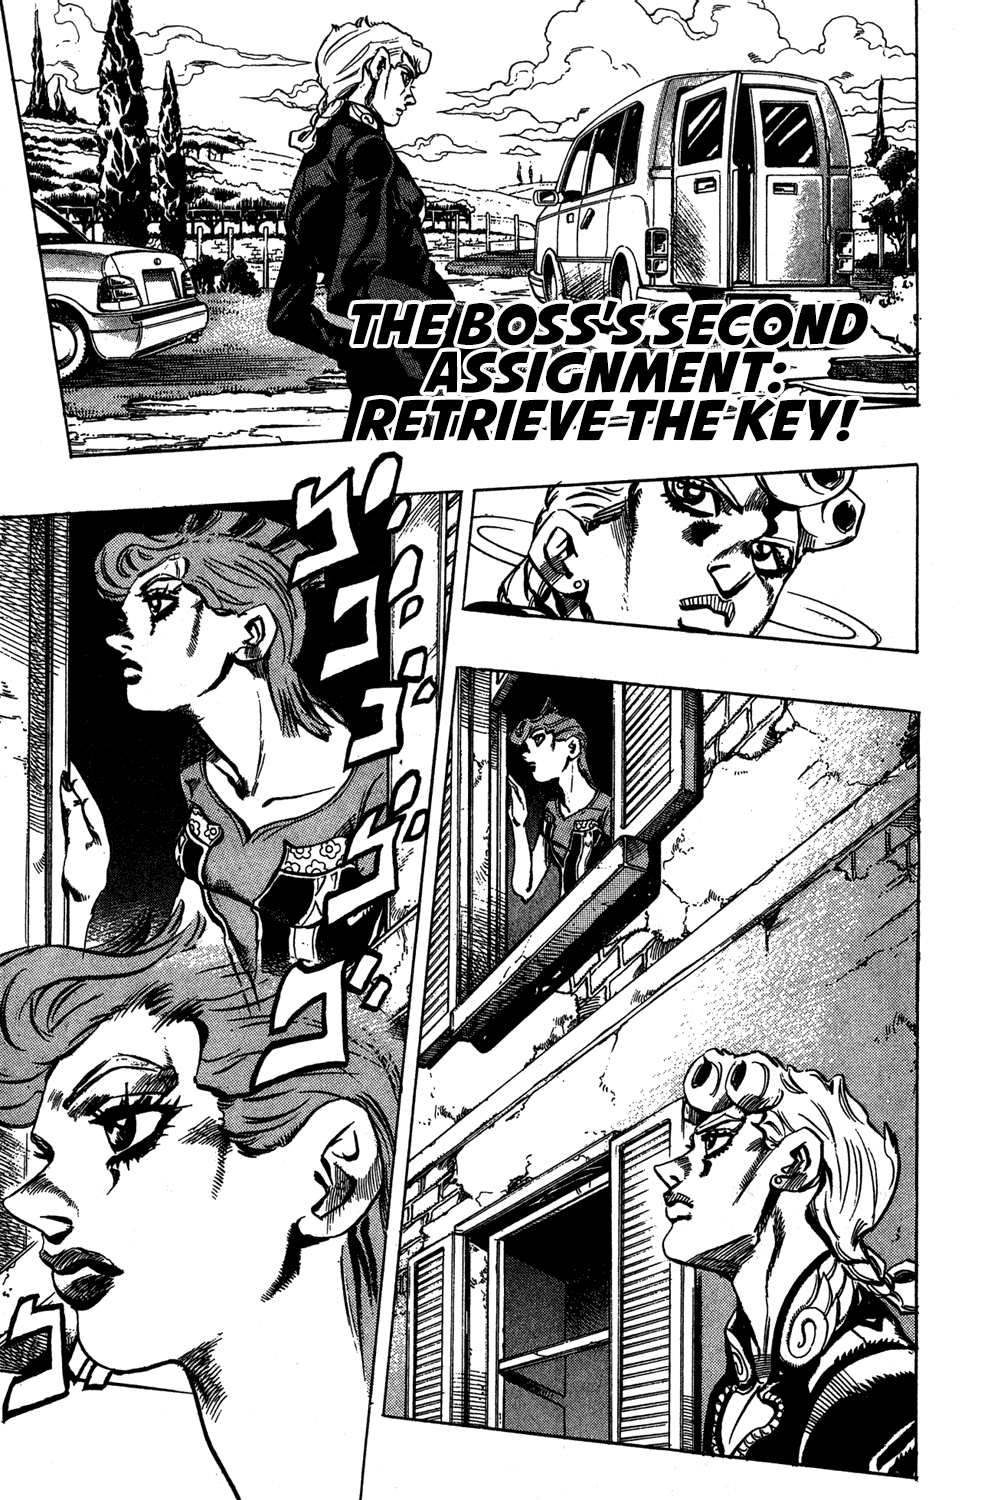 Jojo's Bizarre Adventure Part 5 - Vento Aureo Vol.5 Chapter 39: Second Order From The Boss: Retrieve The Key! - Picture 2